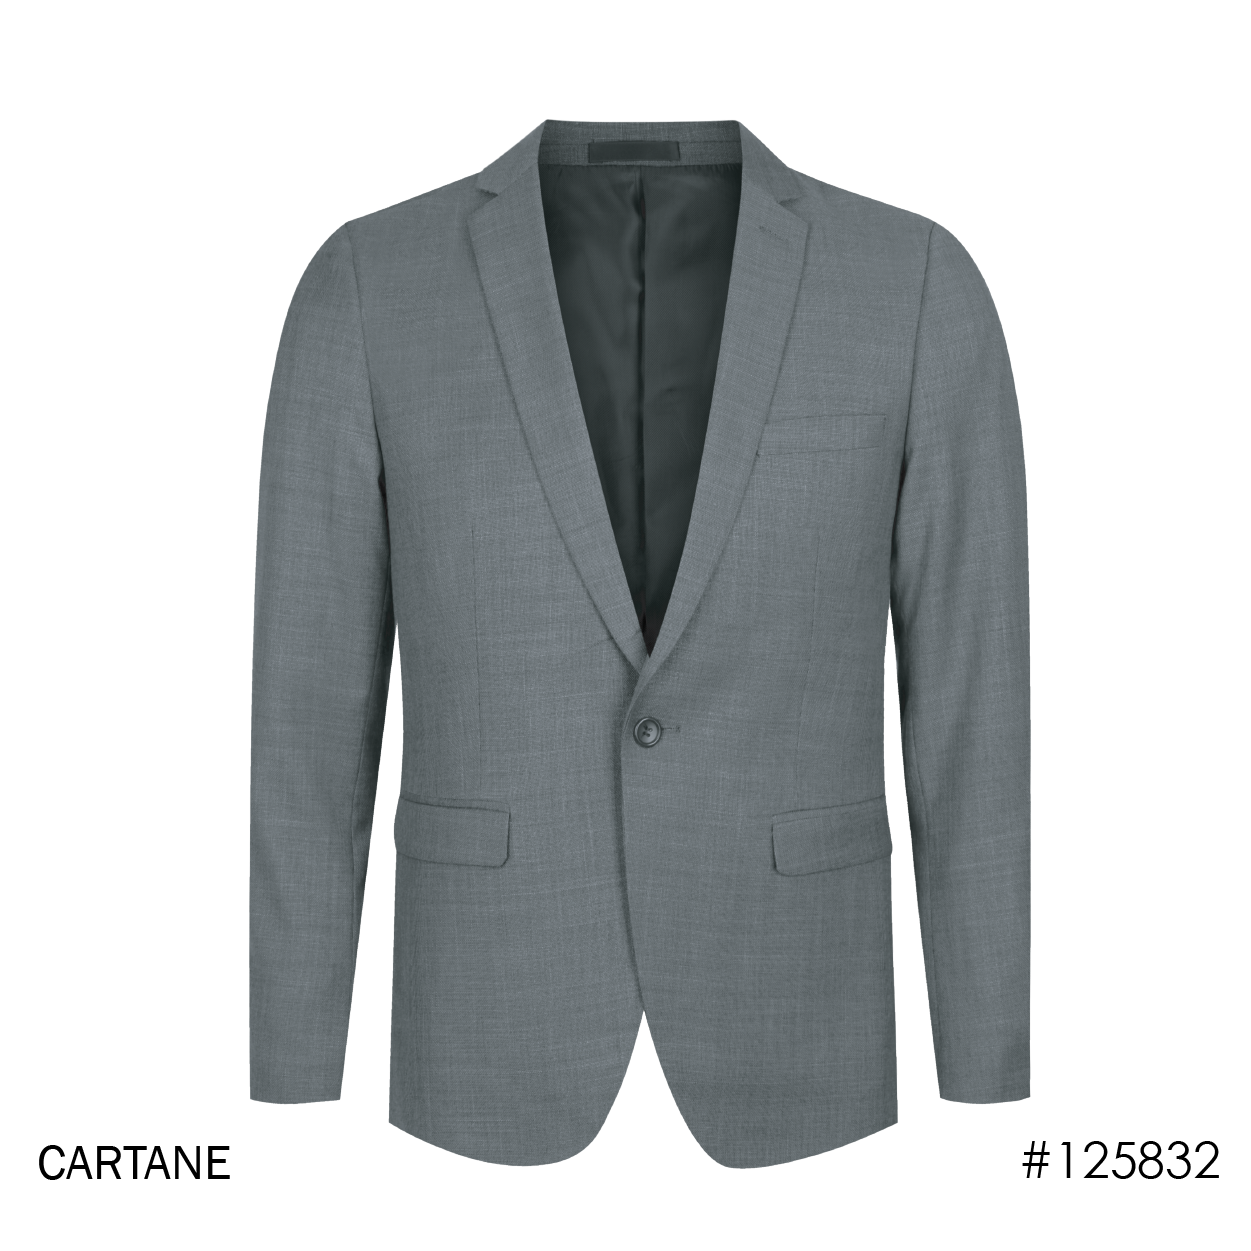 Maurio Cartane Mens Charcoal Suit Jacket